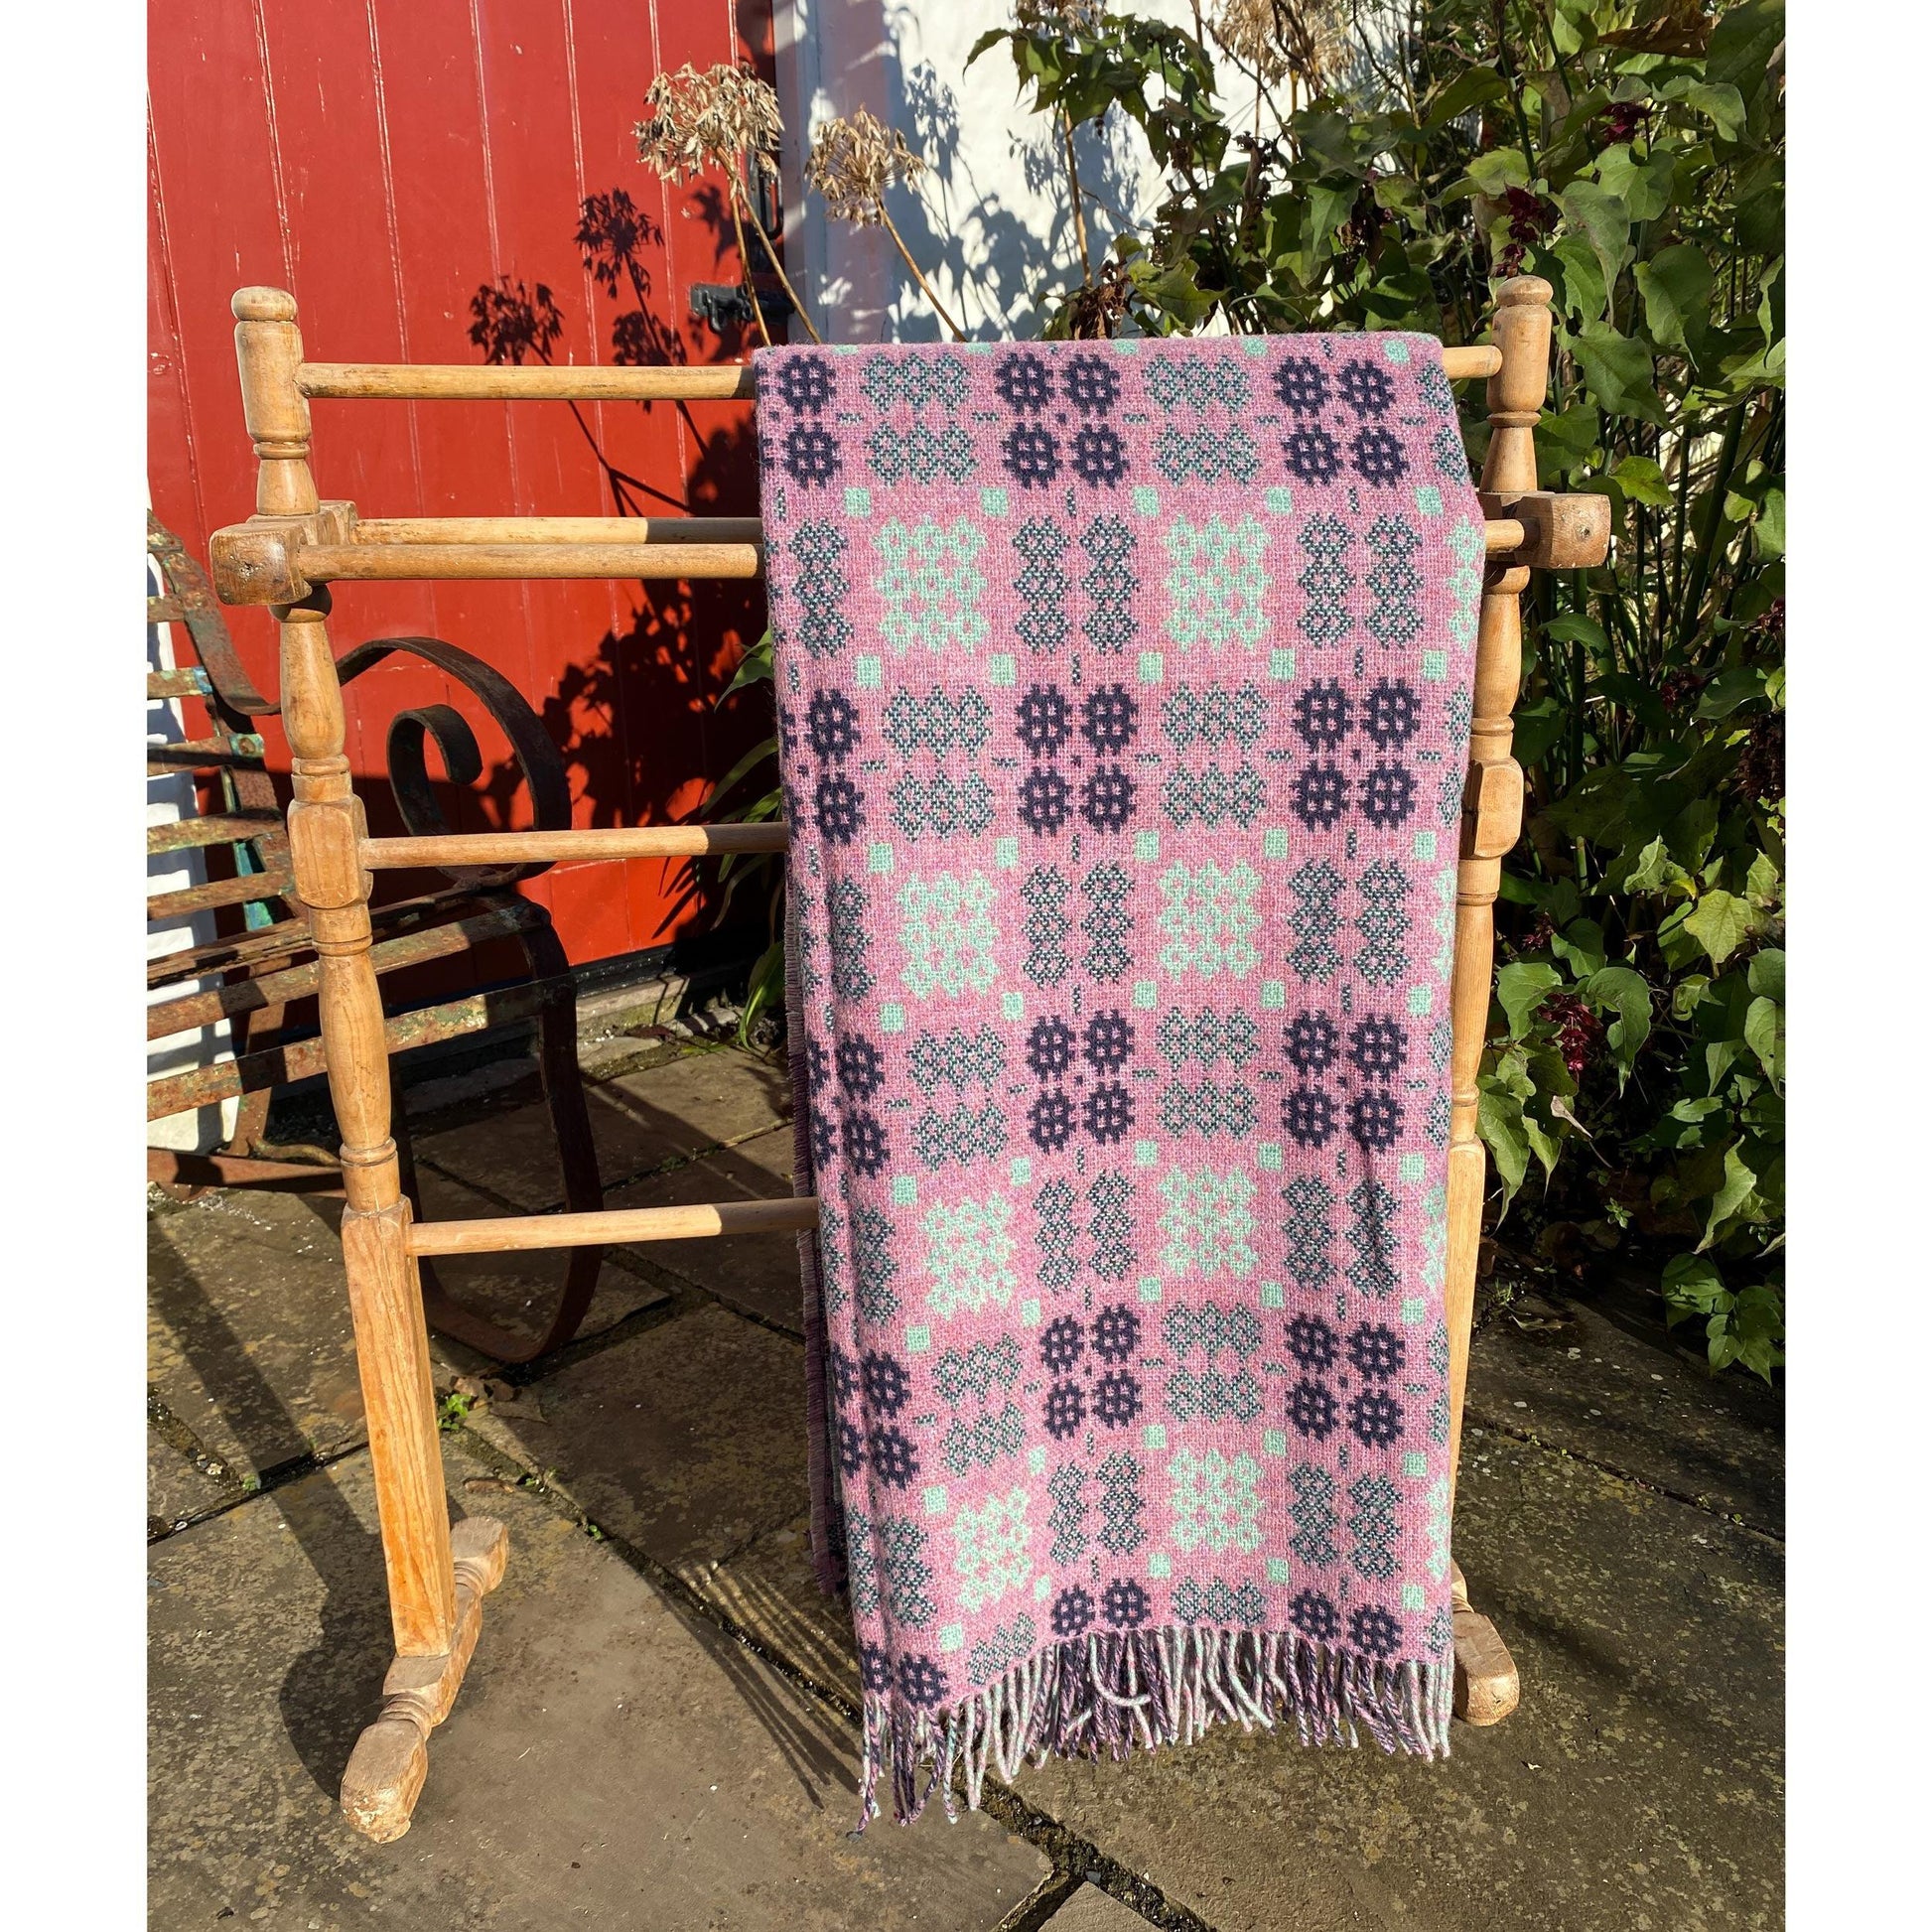 Throw / Blanket - Welsh Tapestry / Carthen Ysgafn - Caernarfon - 100% Wool - Pink & Green